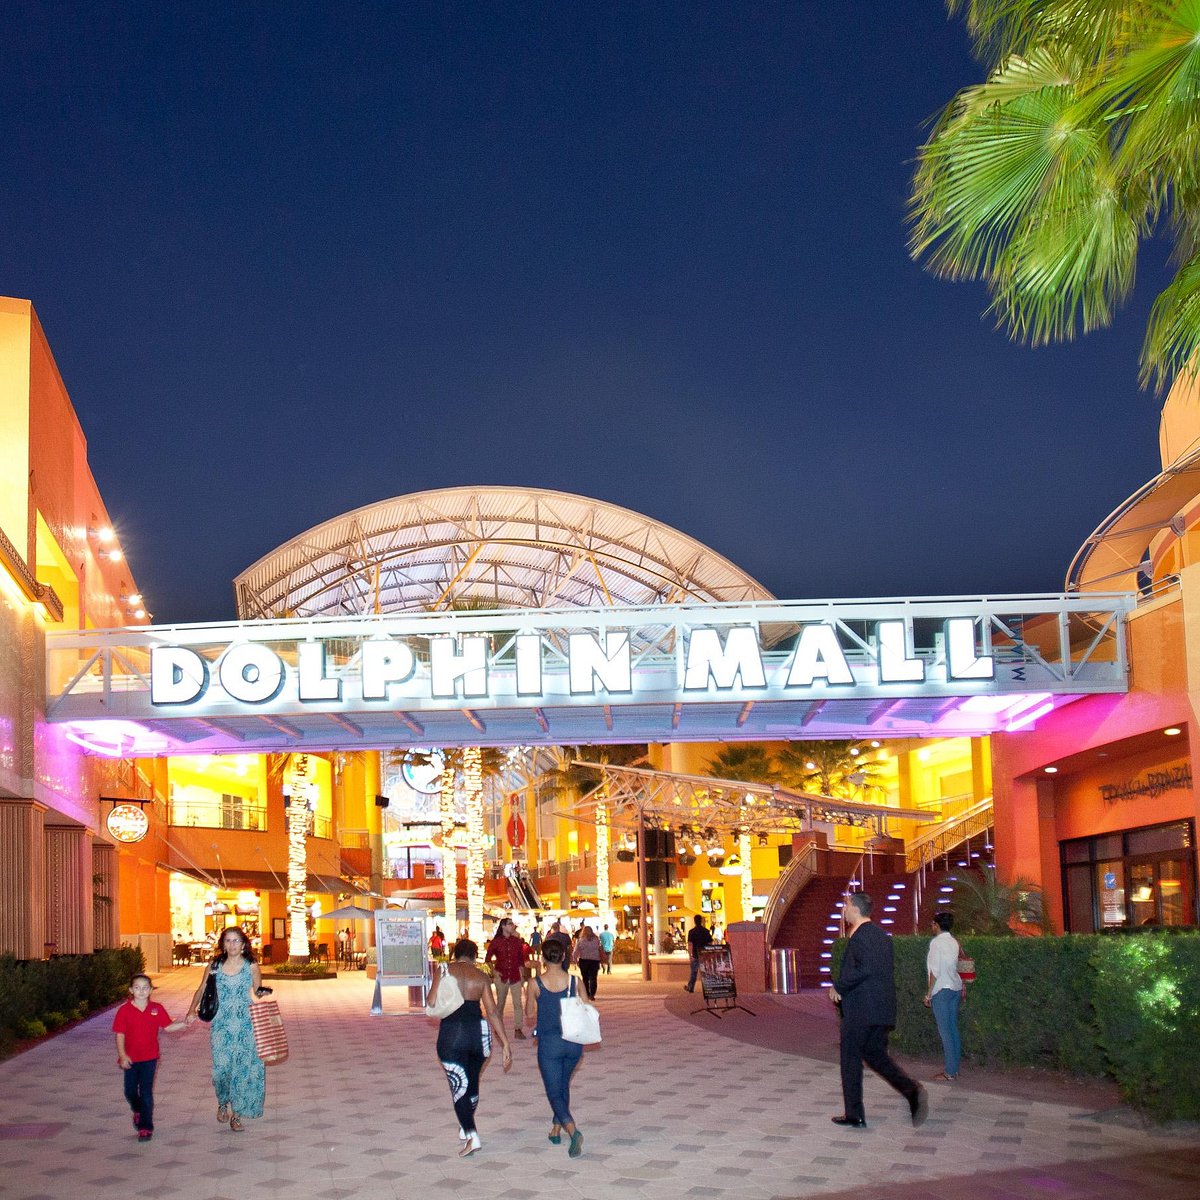 Dolphin Mall – Discount Haven in Miami